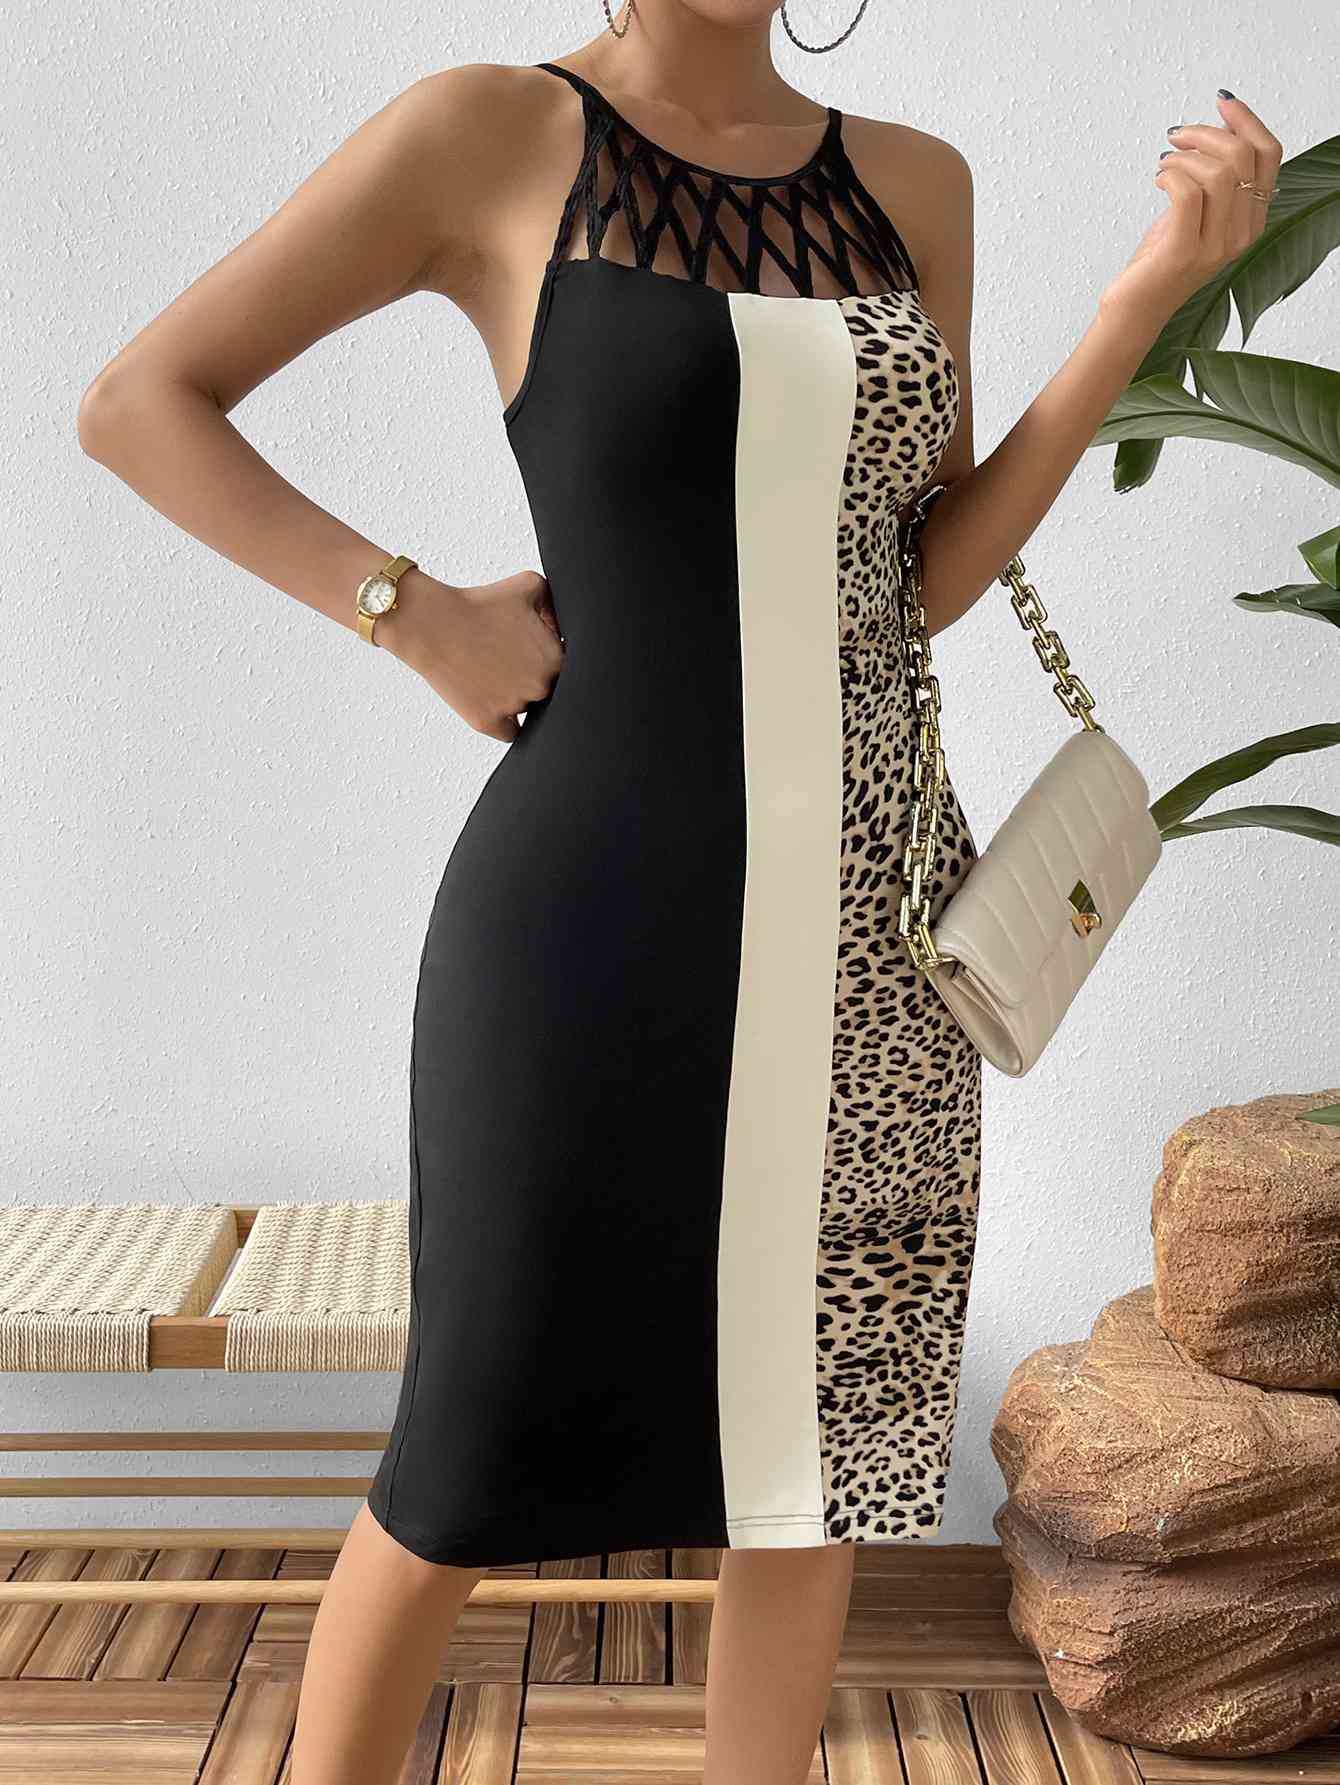 Dress: Leopard Color Block Cutout Sleeveless Knee-Length Dress